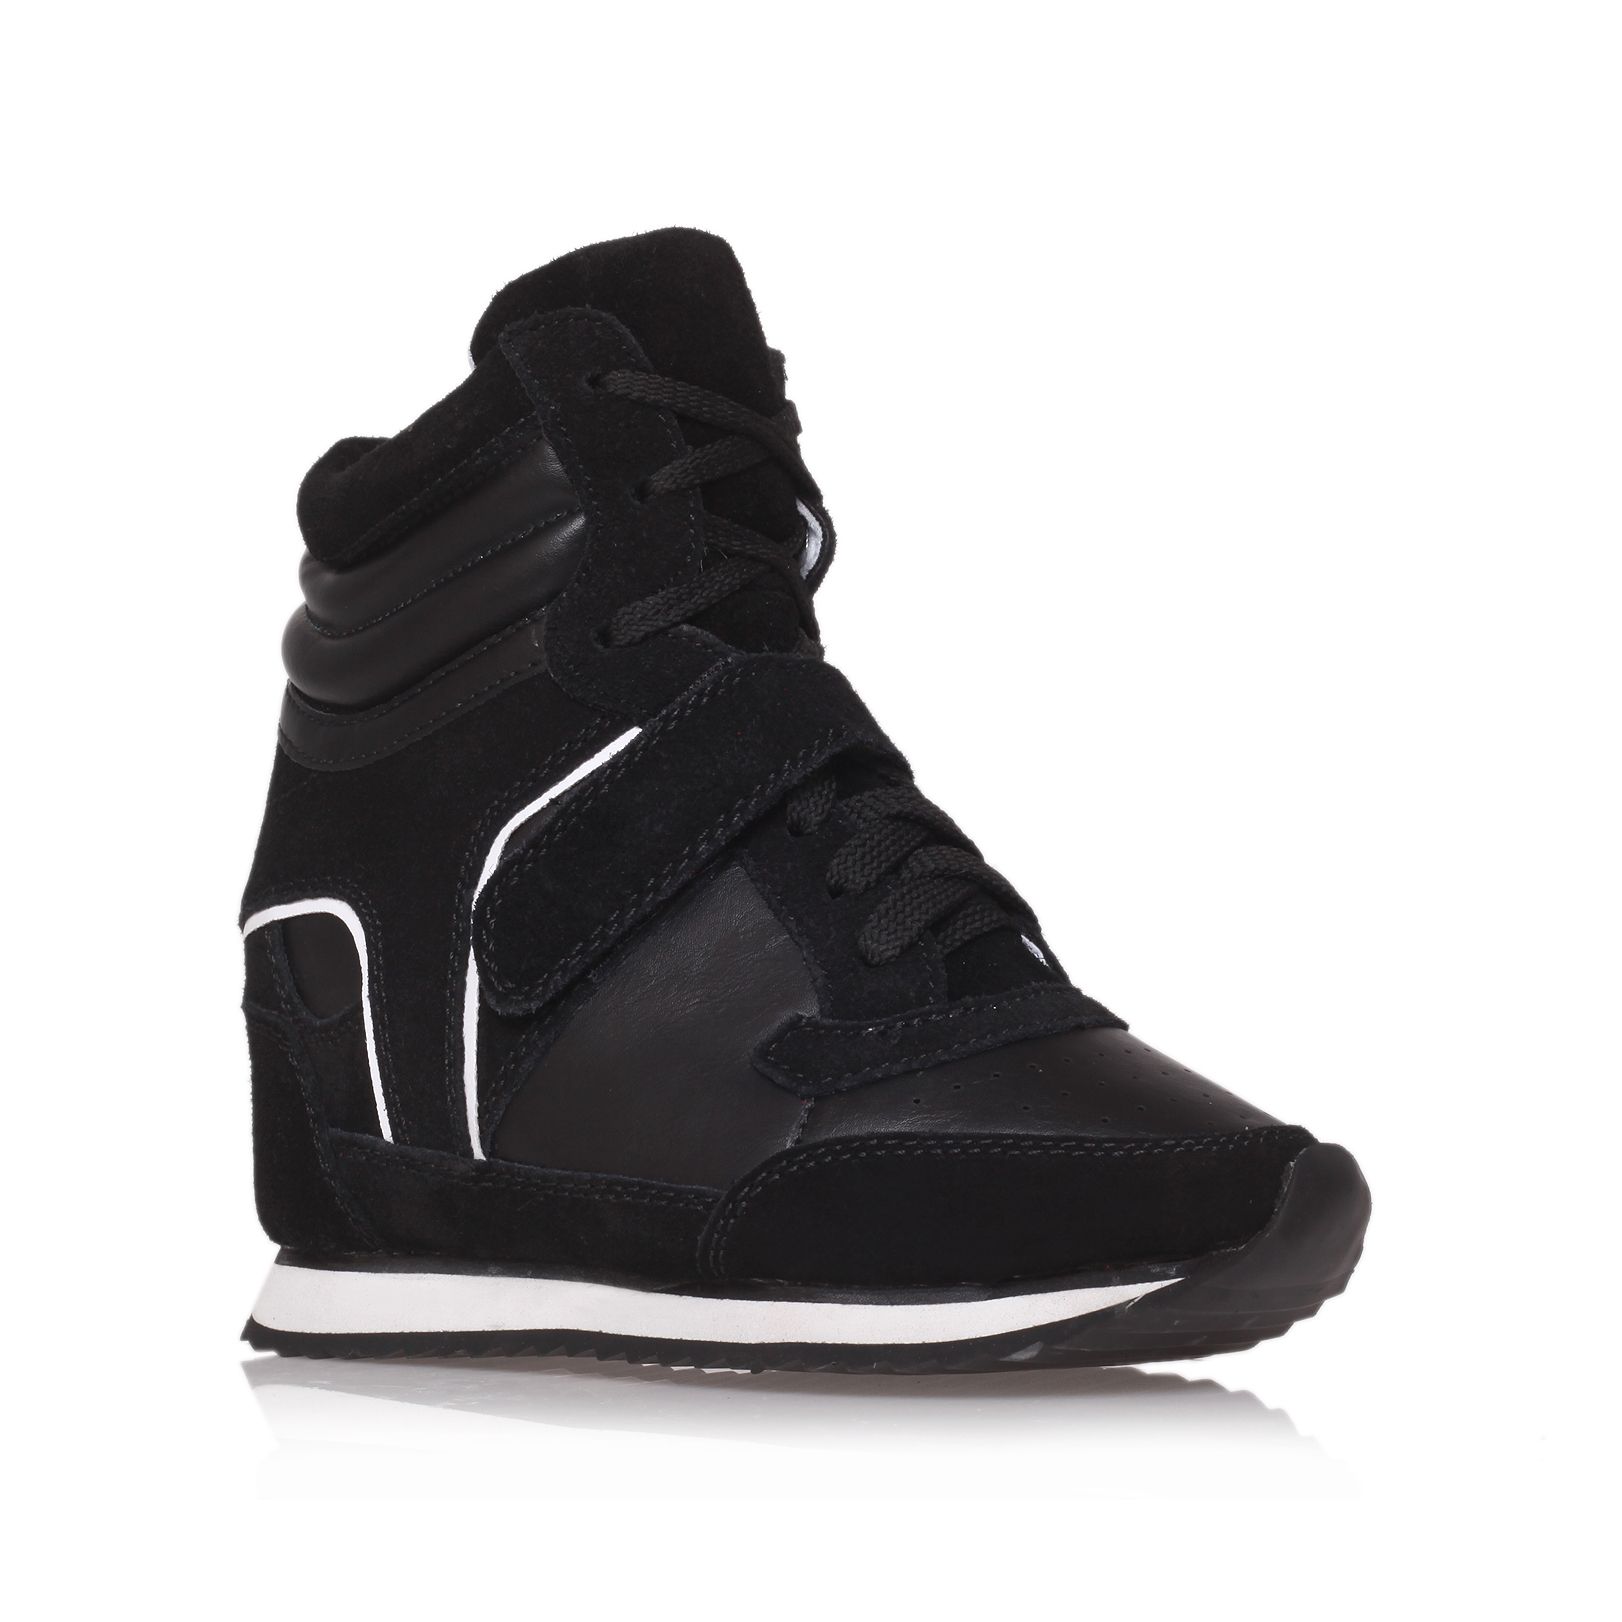 Carvela Kurt Geiger London Trainer Shoes in Black | Lyst